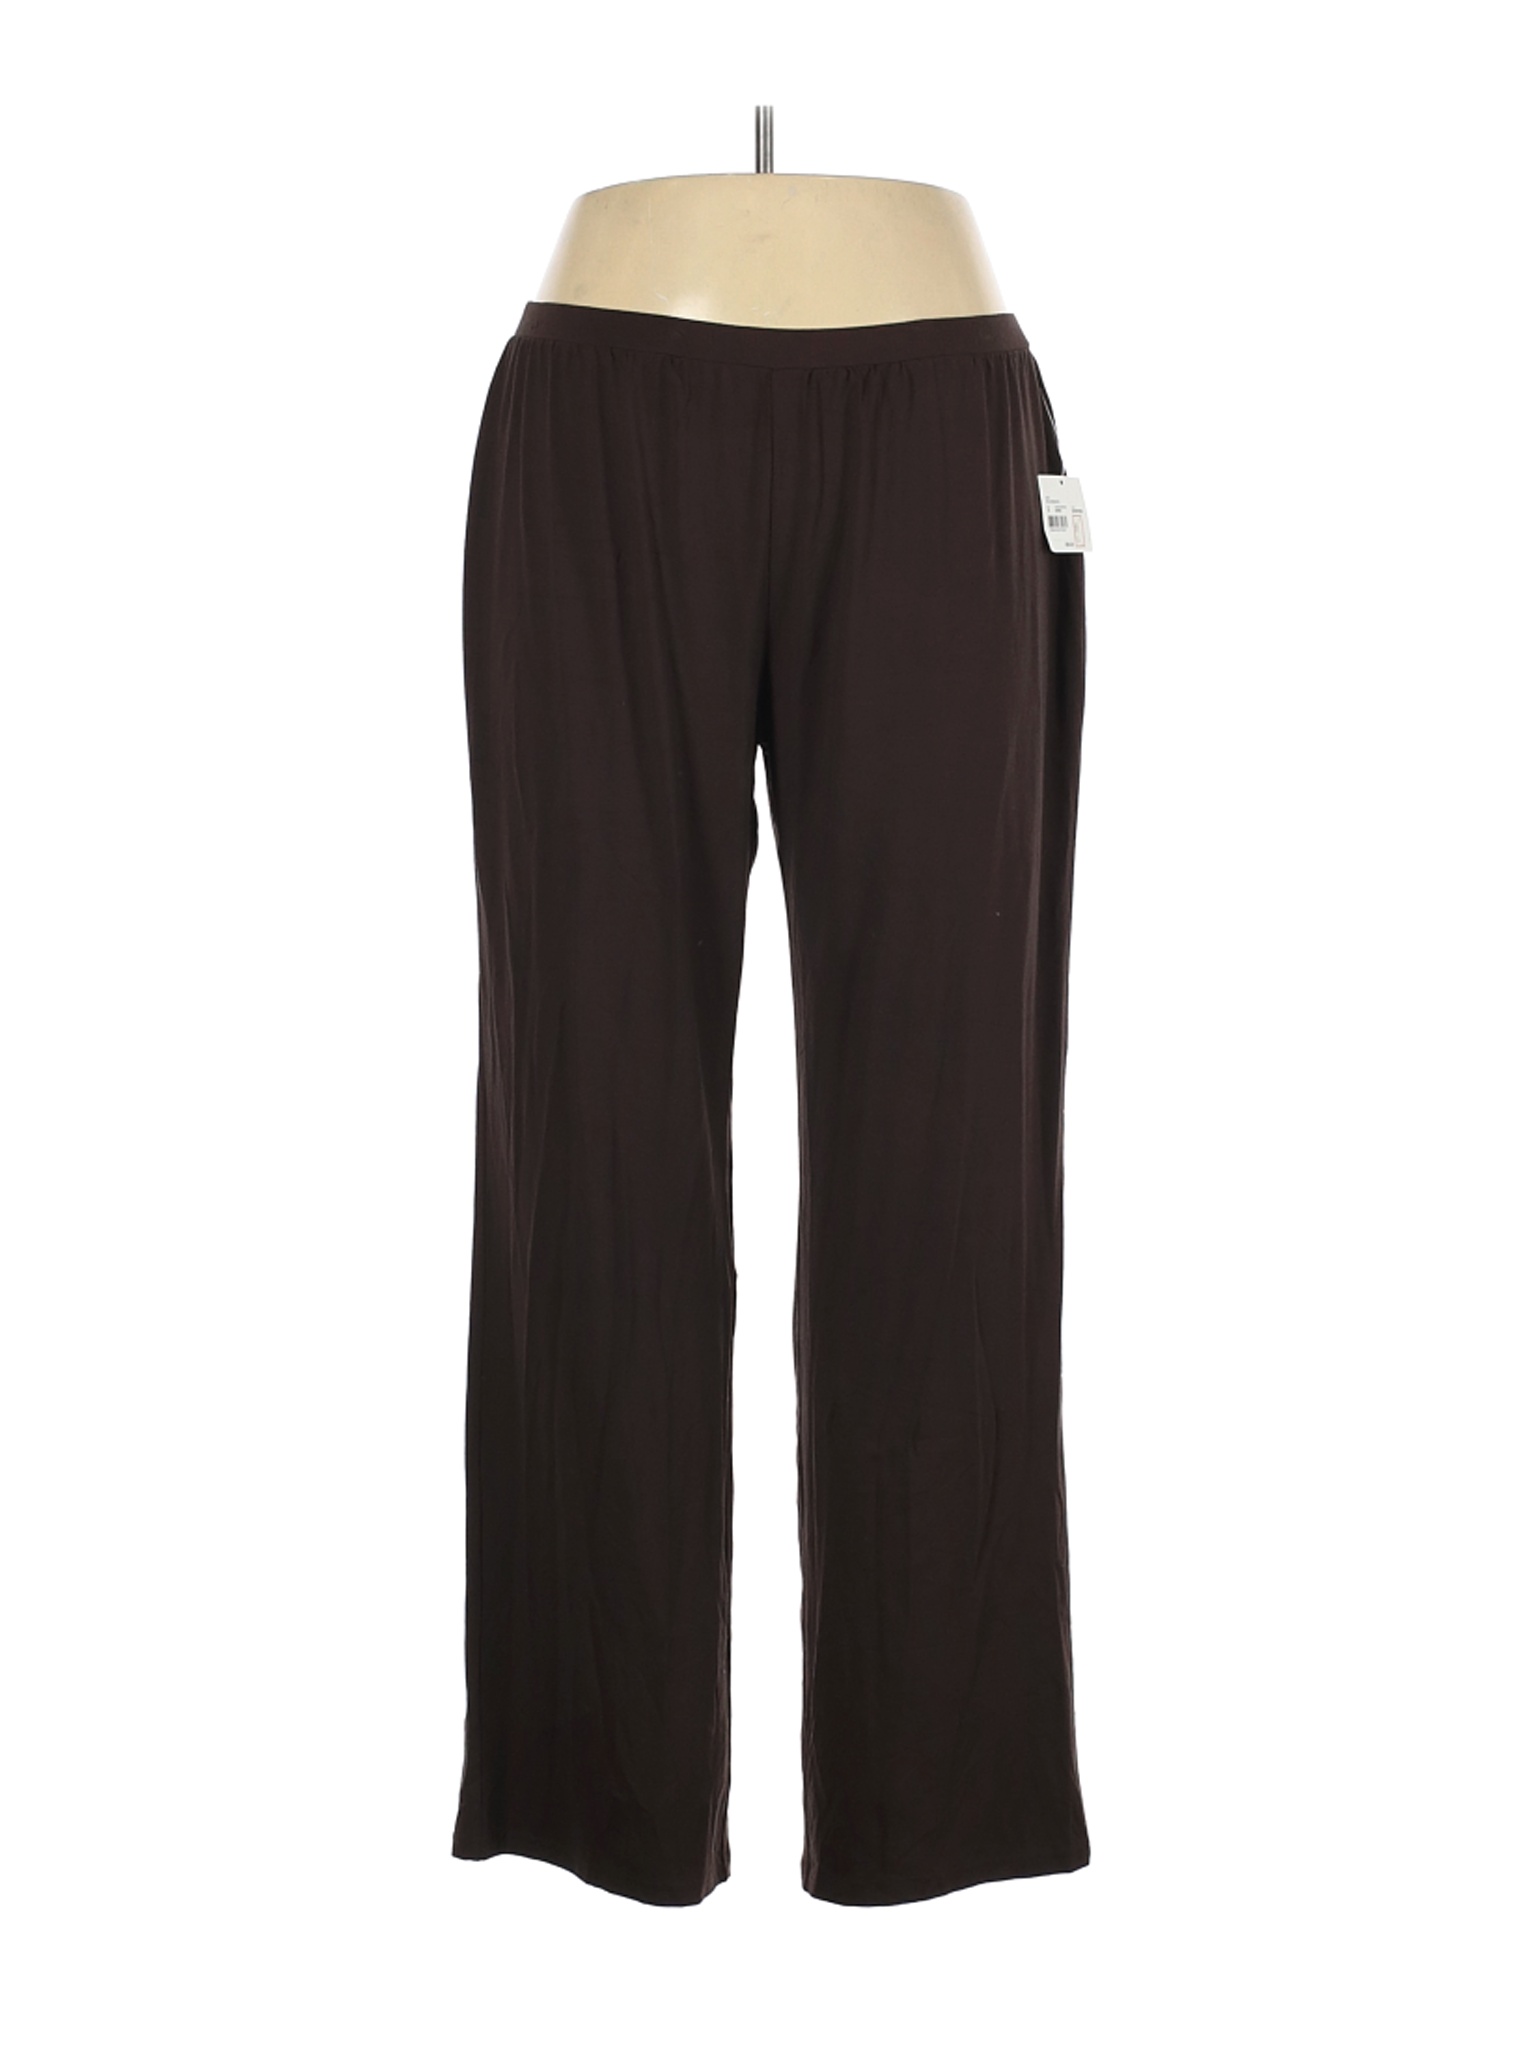 NWT Kate Hill Women Black Casual Pants 1X Plus | eBay